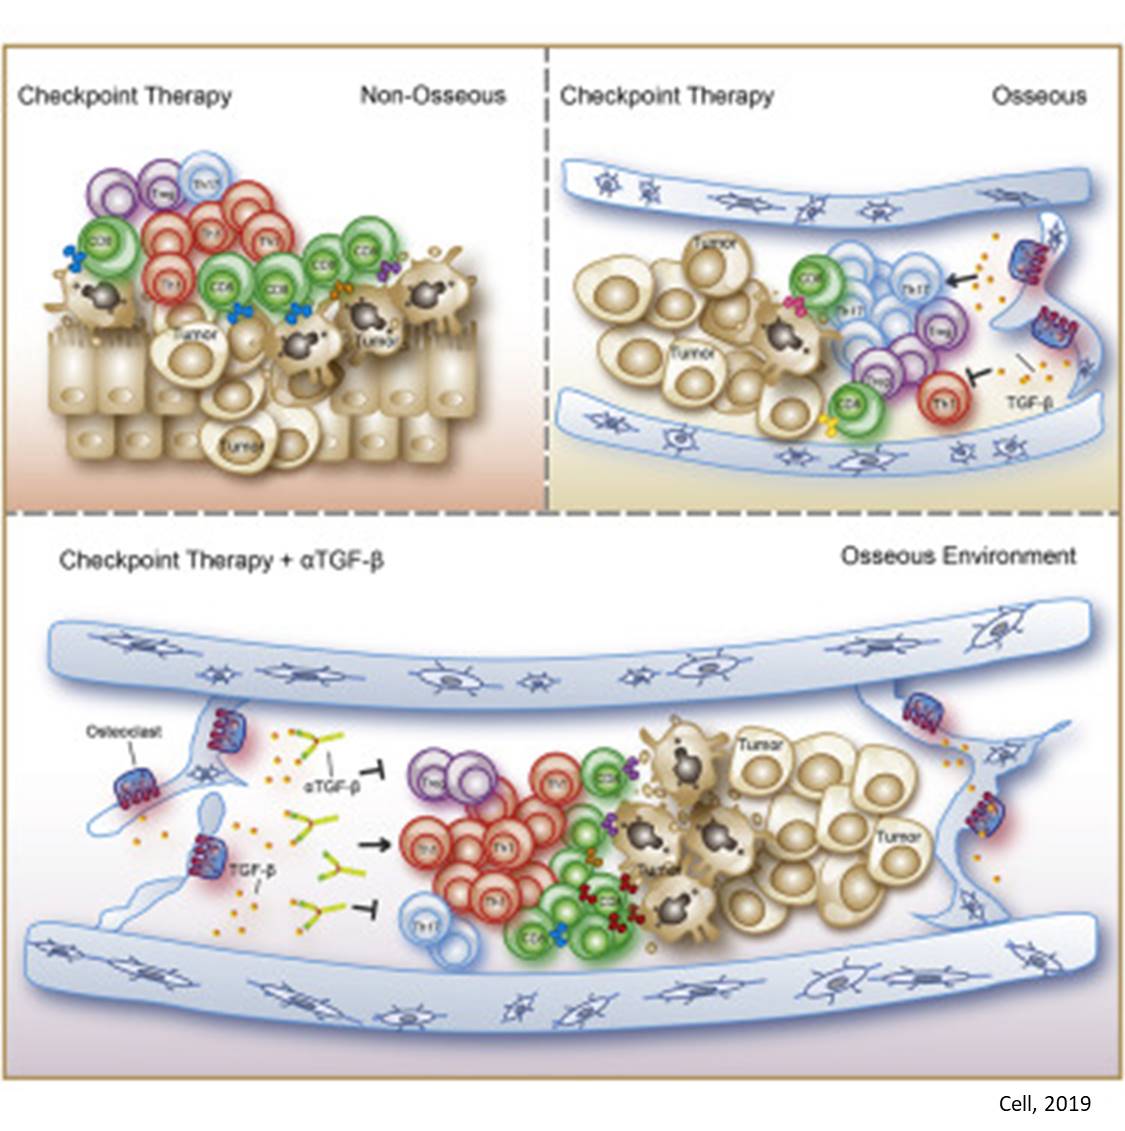 Prostate cancer bone metastases thwart immunotherapy by producing TGF-beta 